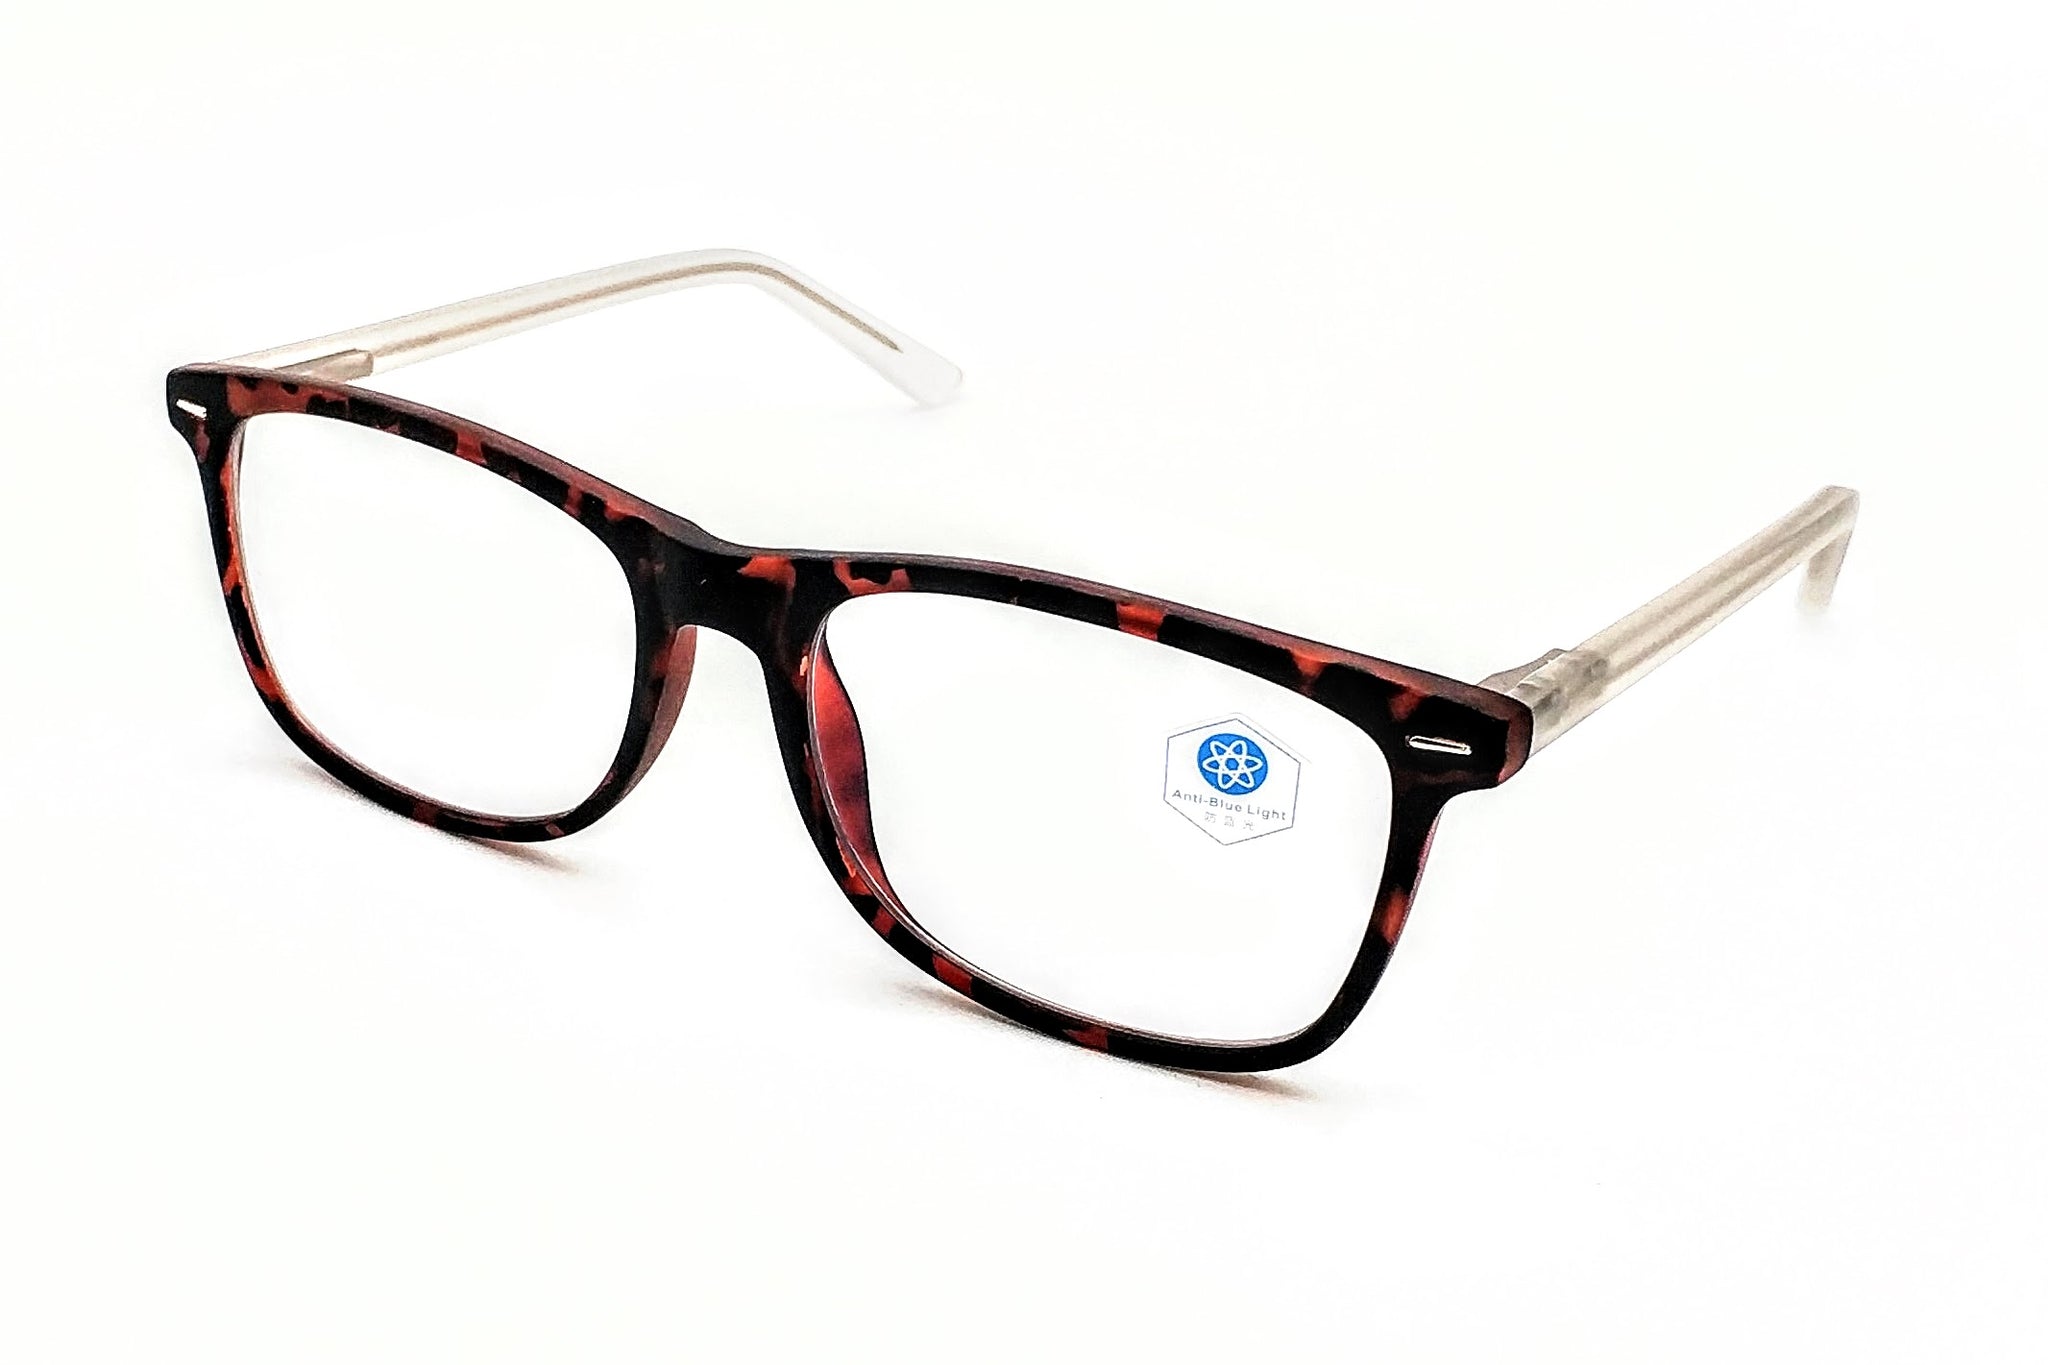 Blue Light Glasses, Digital Protection